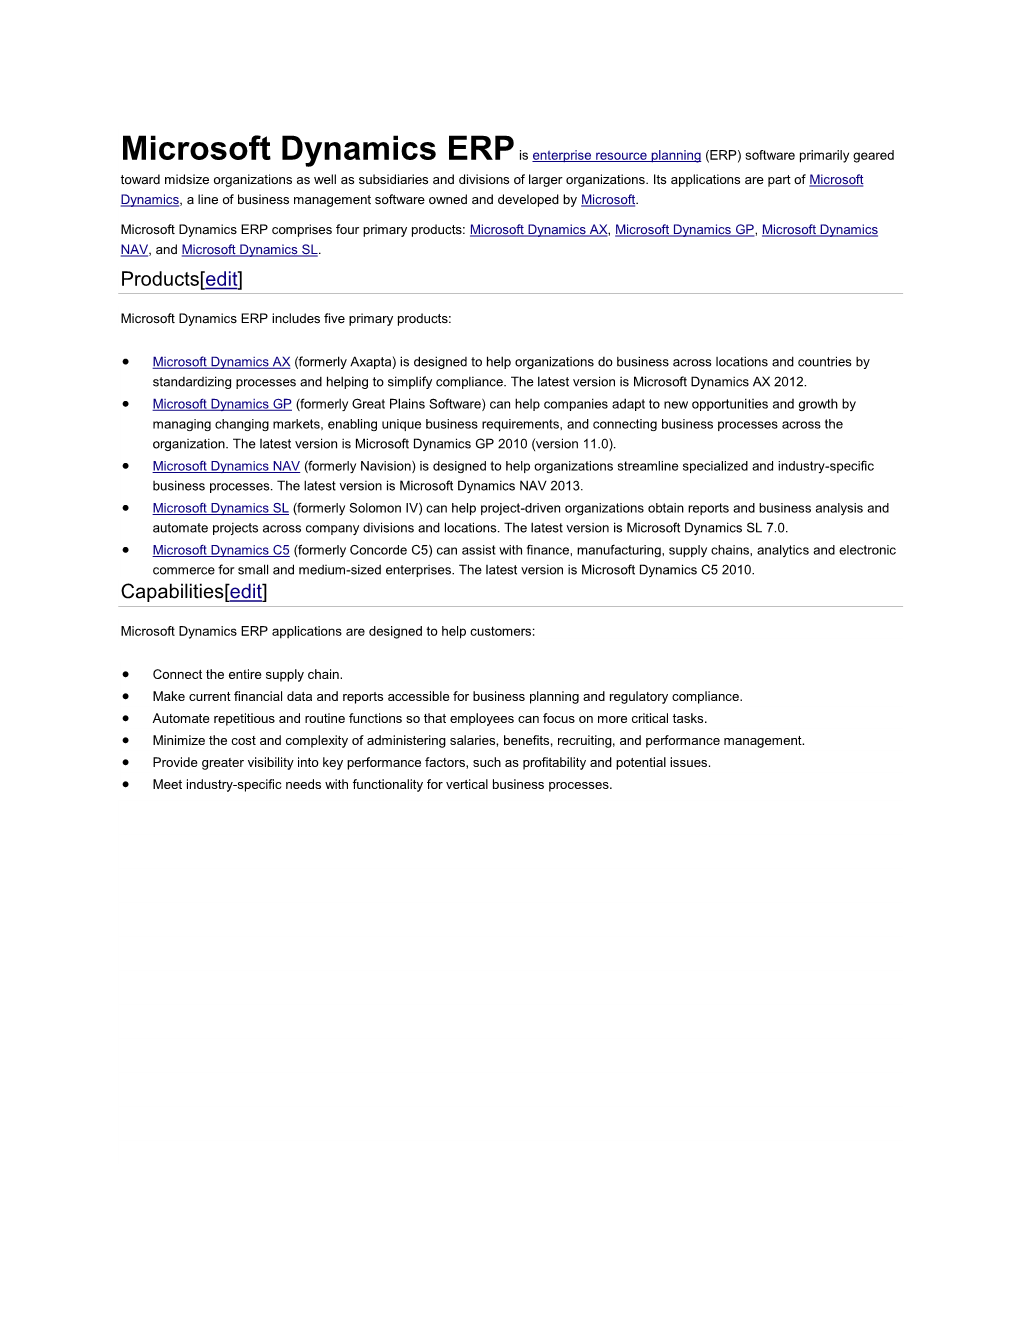 Microsoft Dynamics Erpis Enterprise Resource Planning (ERP)